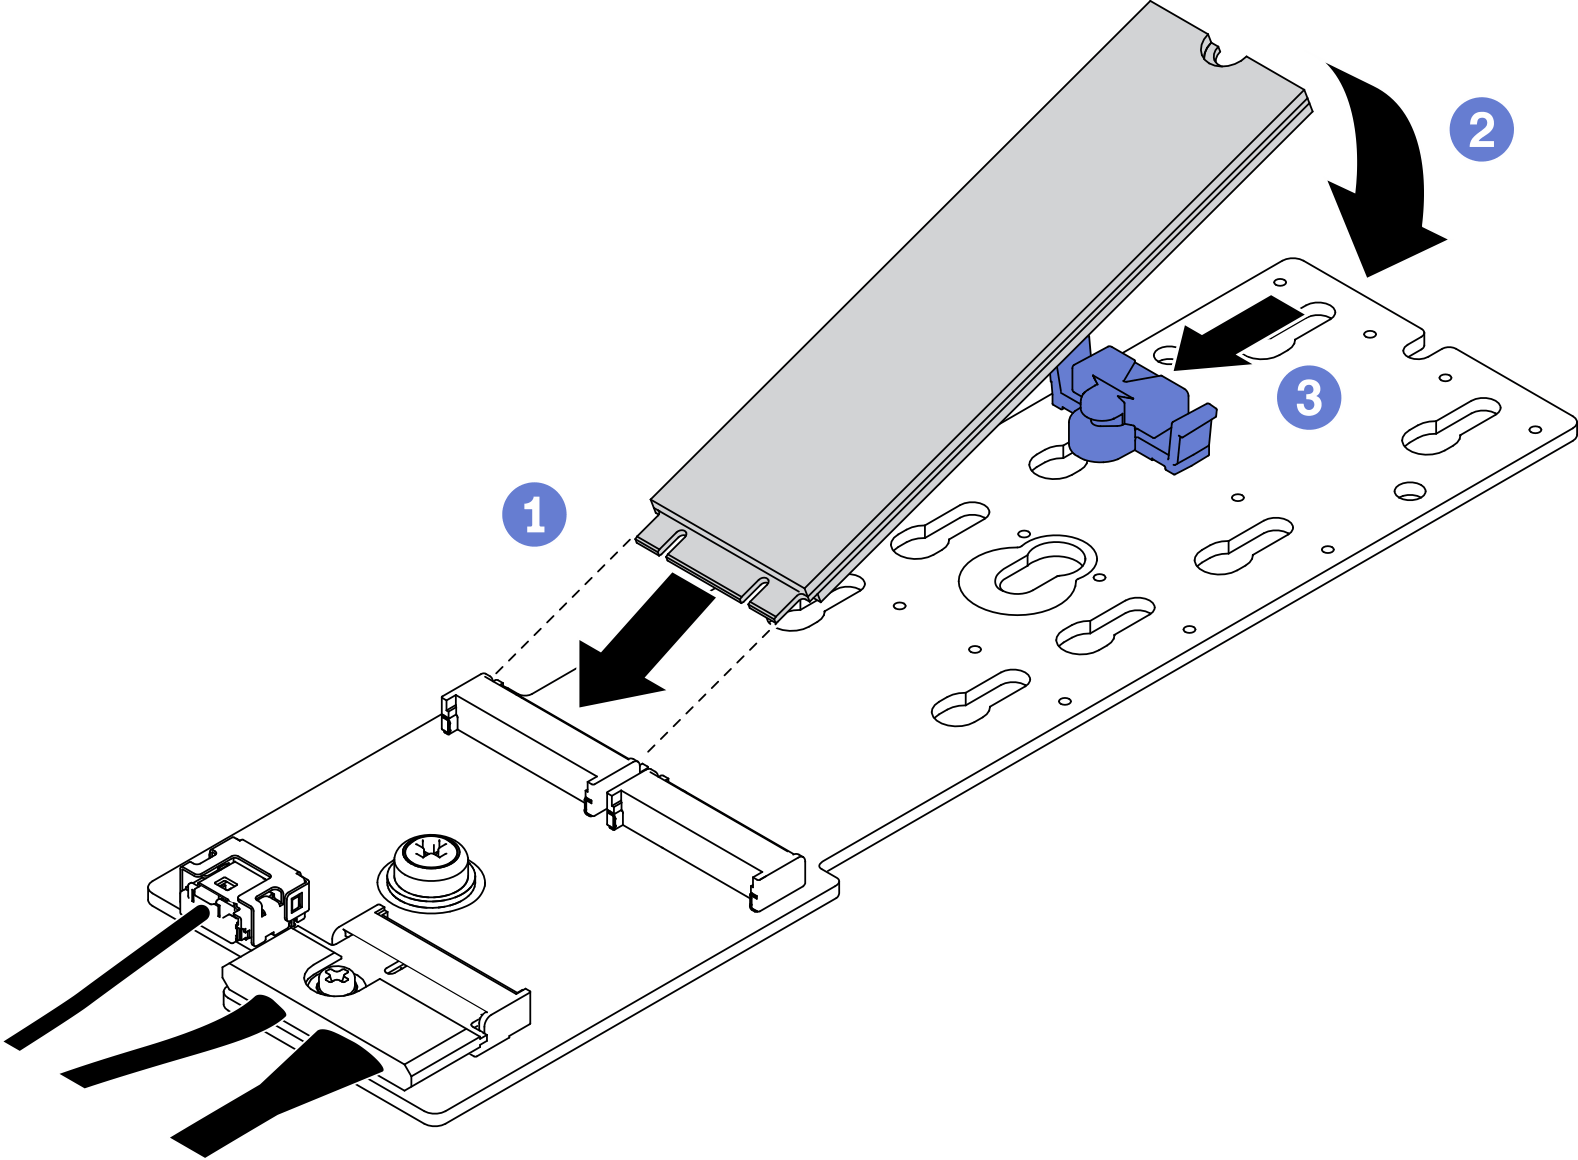 Installing an M.2 drive